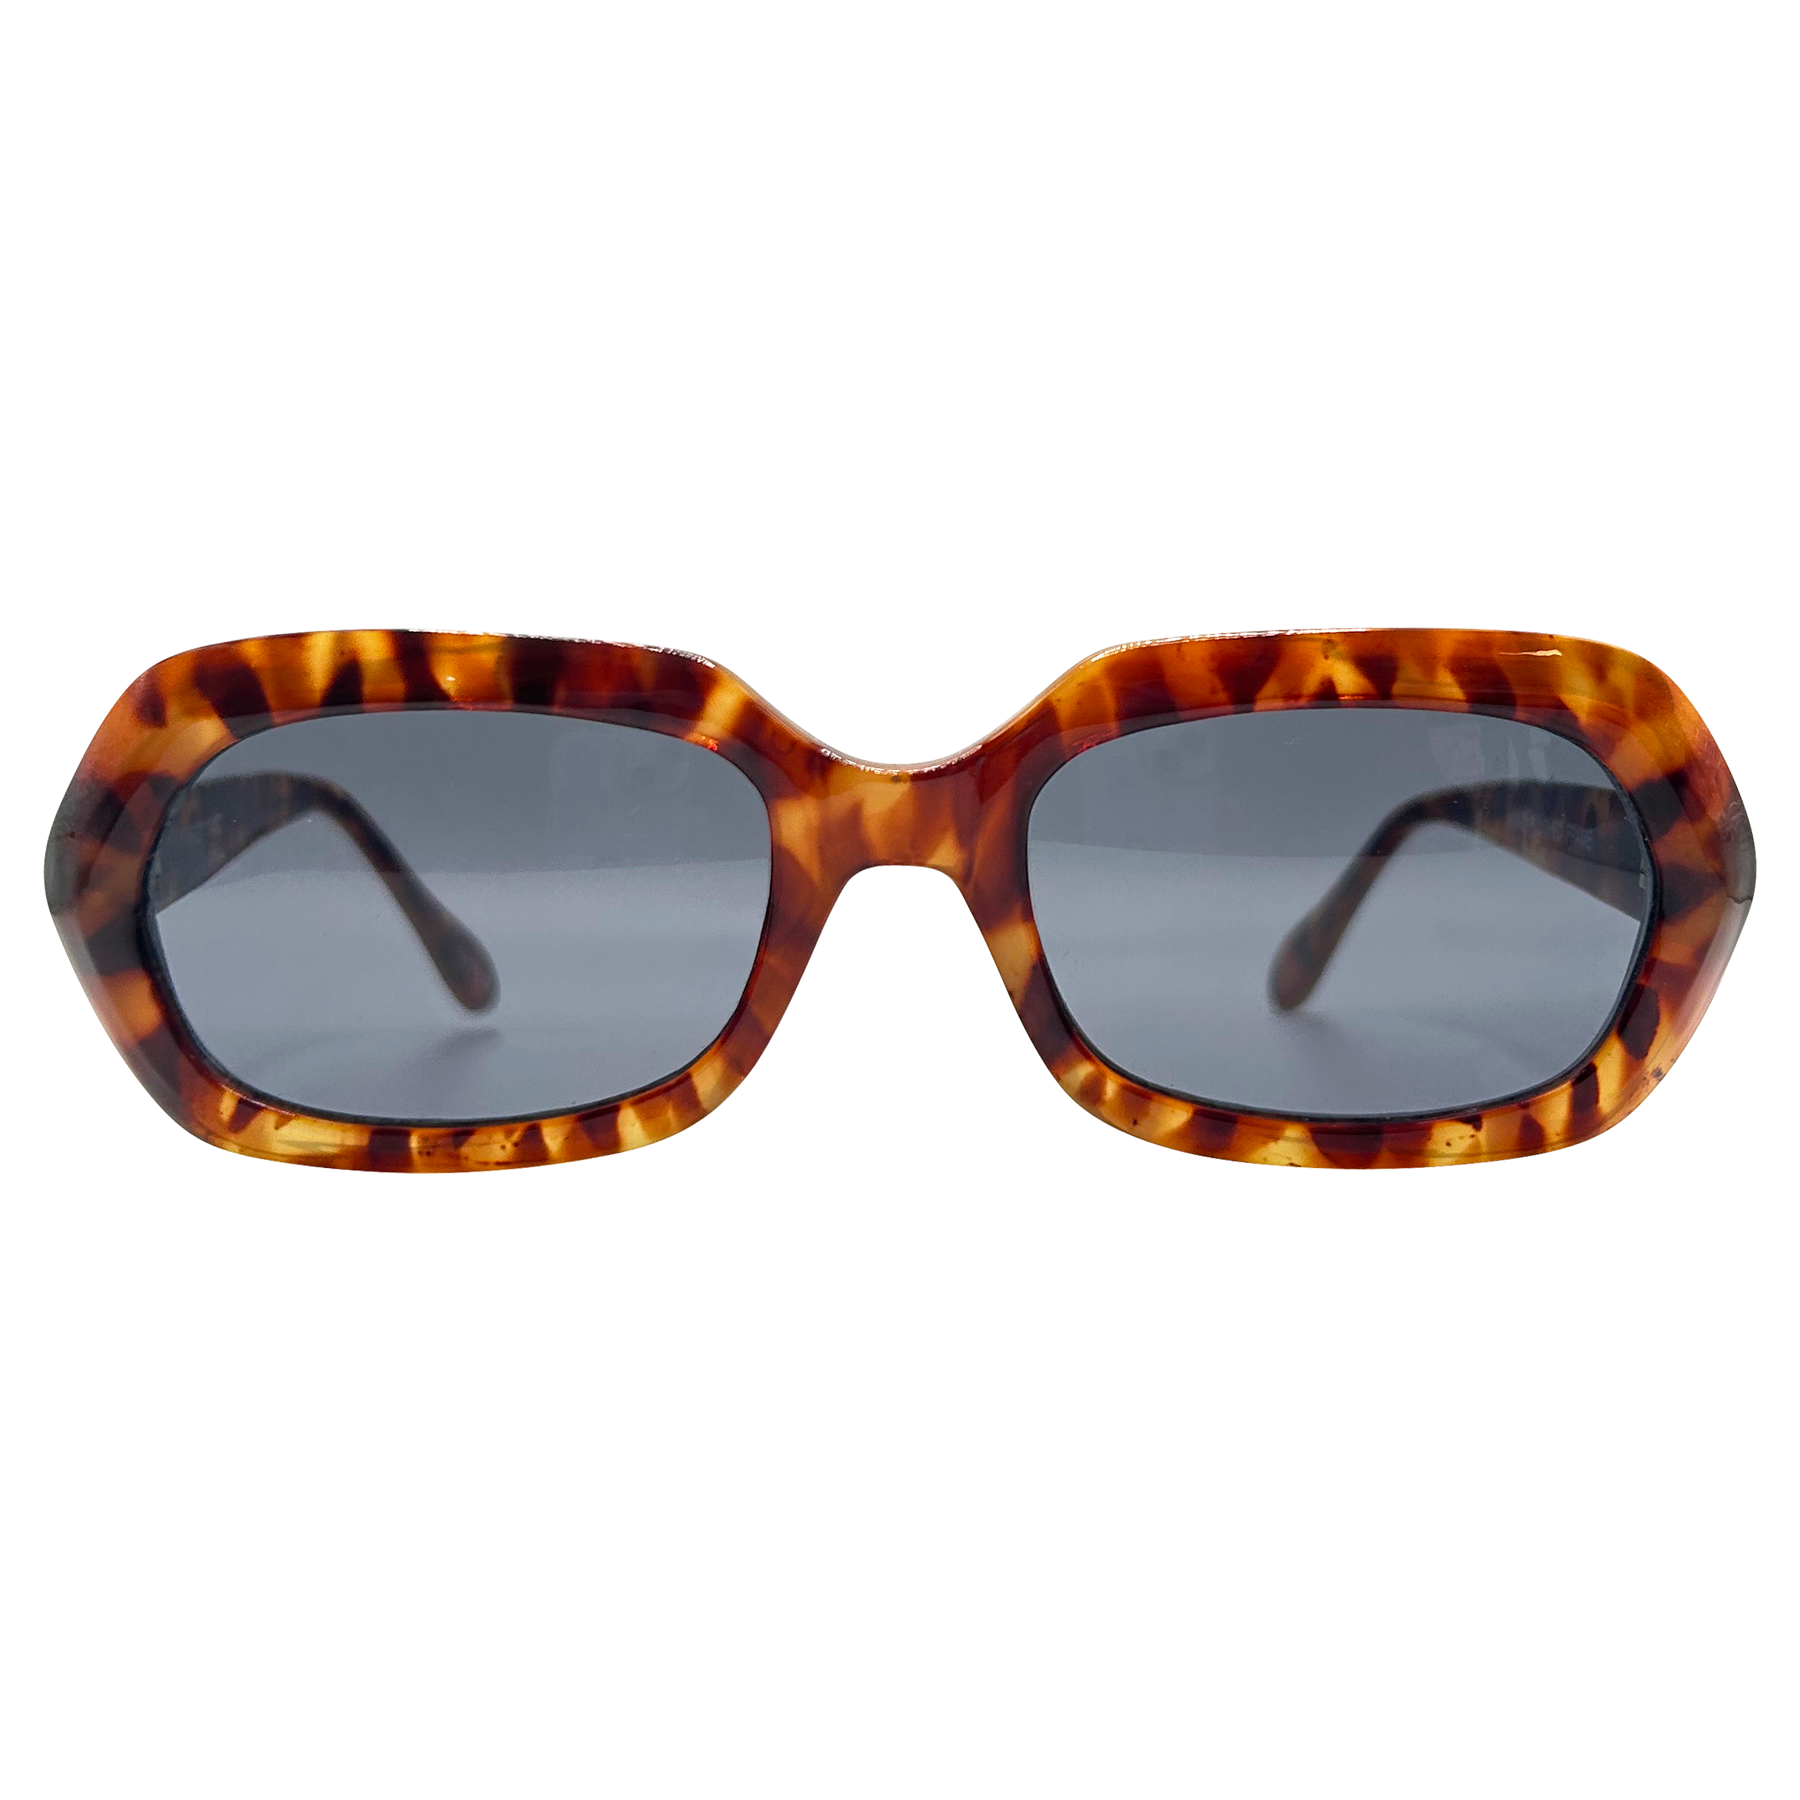 TUESDAY Toast/Super Dark Mod Sunglasses